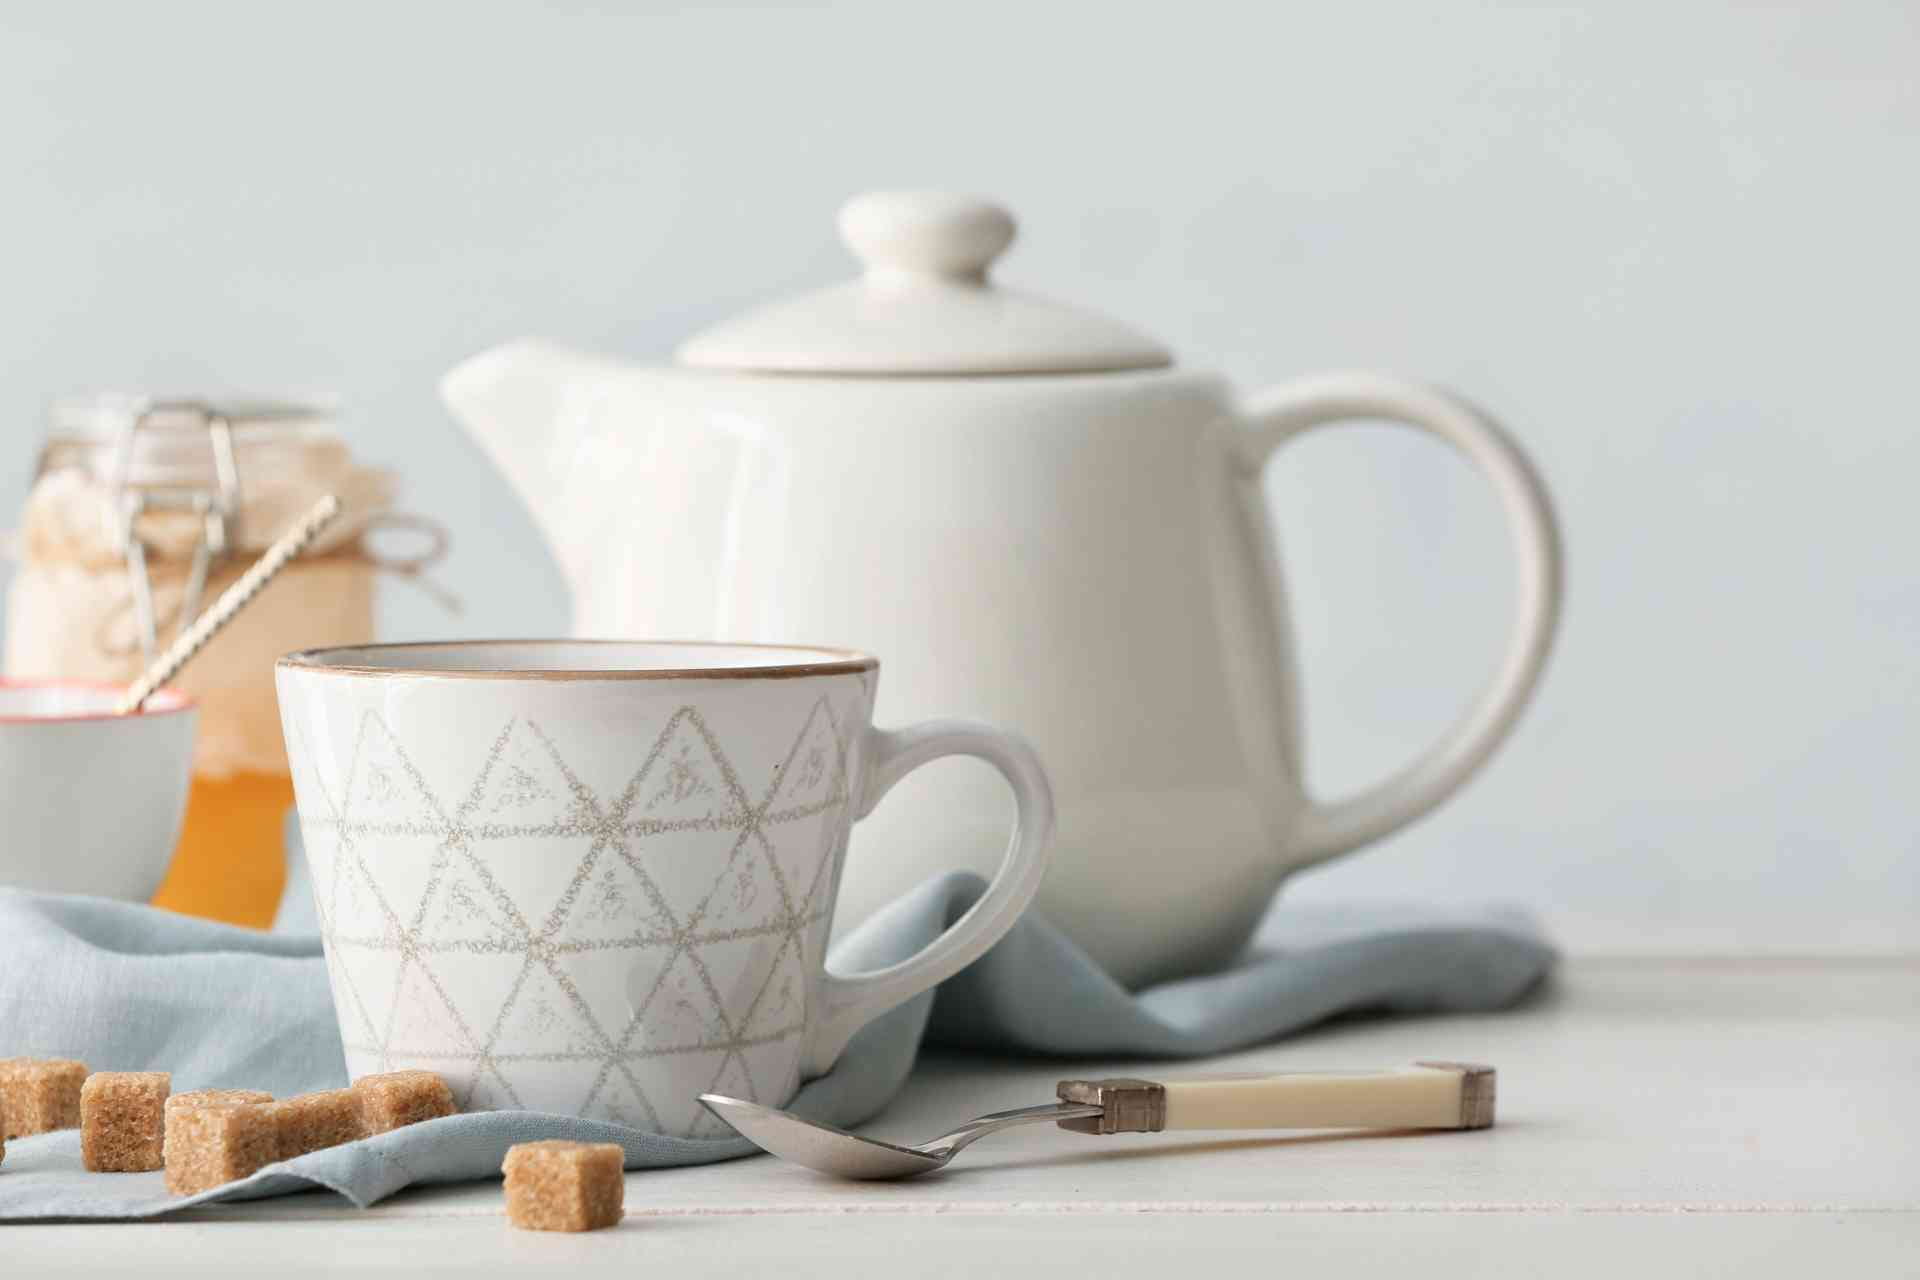 Kmart teapots and mugs